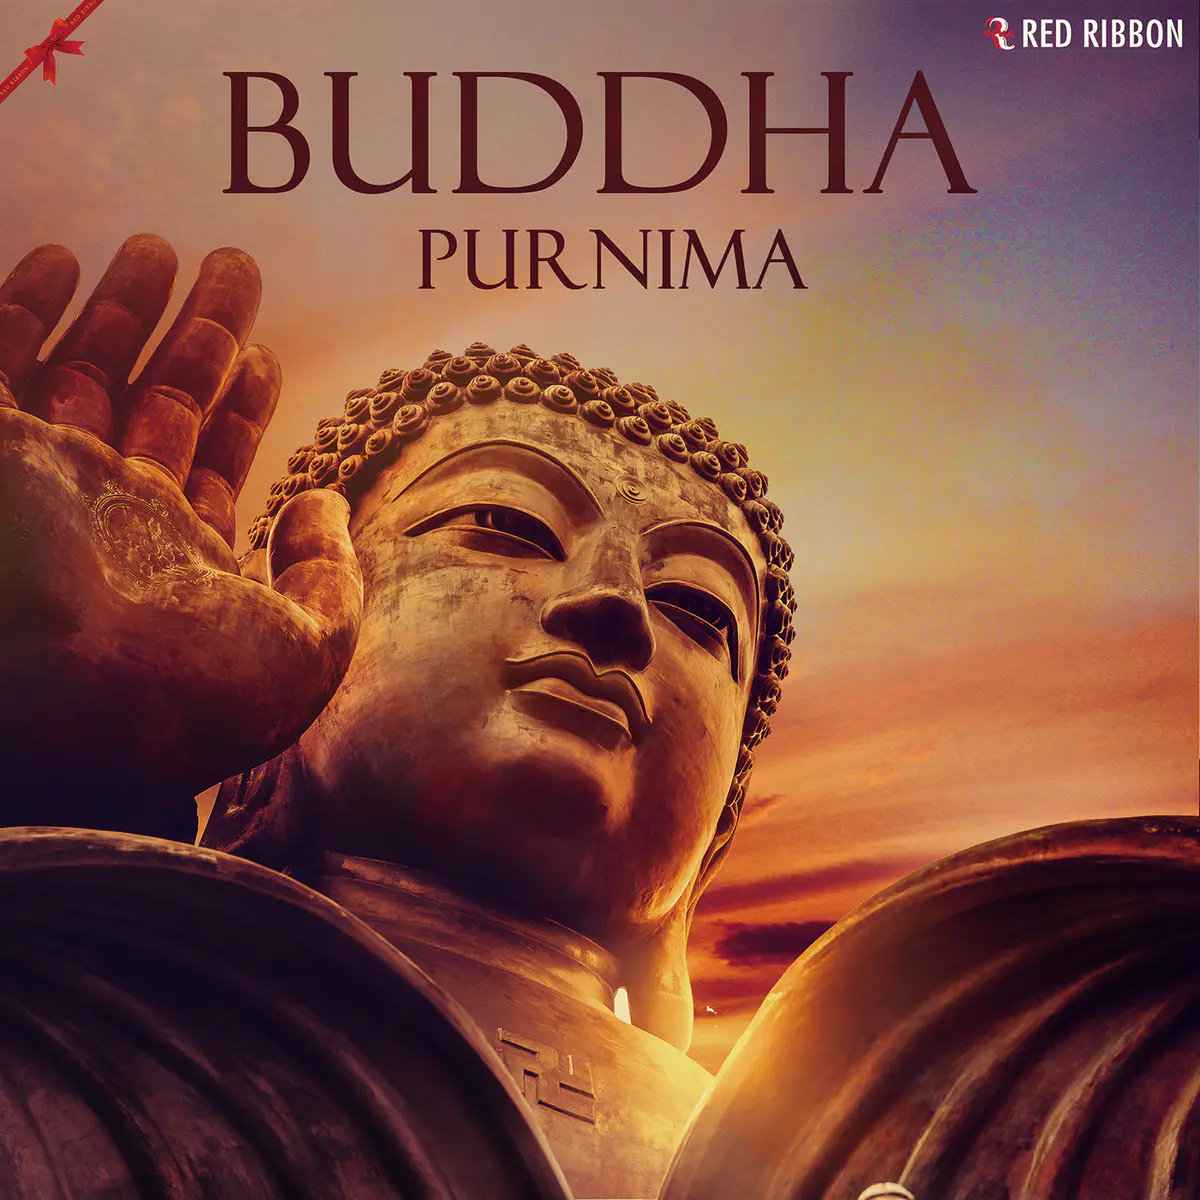 Lord Buddha Hindi mp3 songs free, download